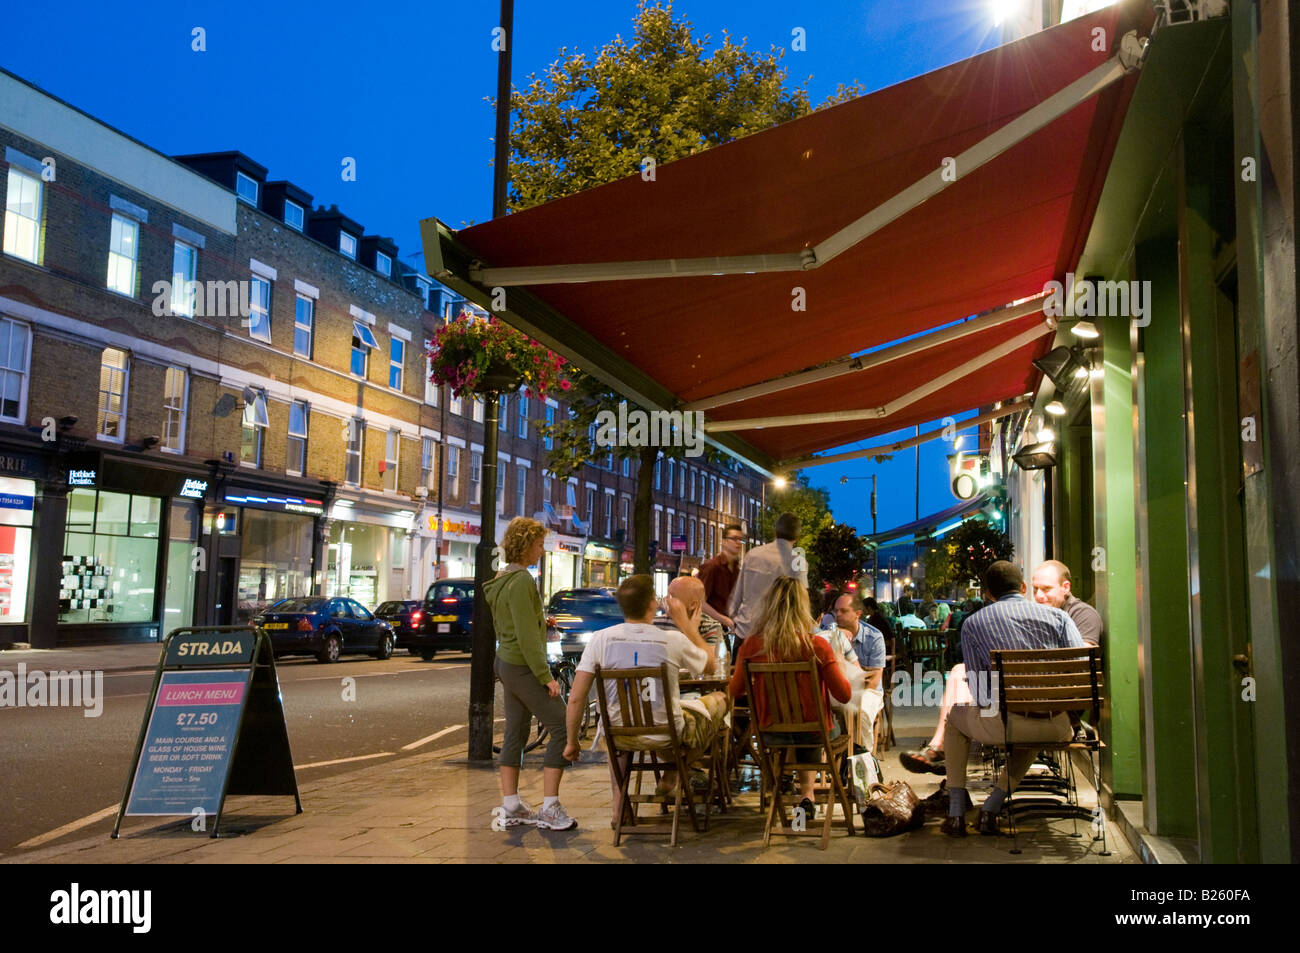 Strada restaurant on Upper Street in Islington, London, England UK Stock Photo